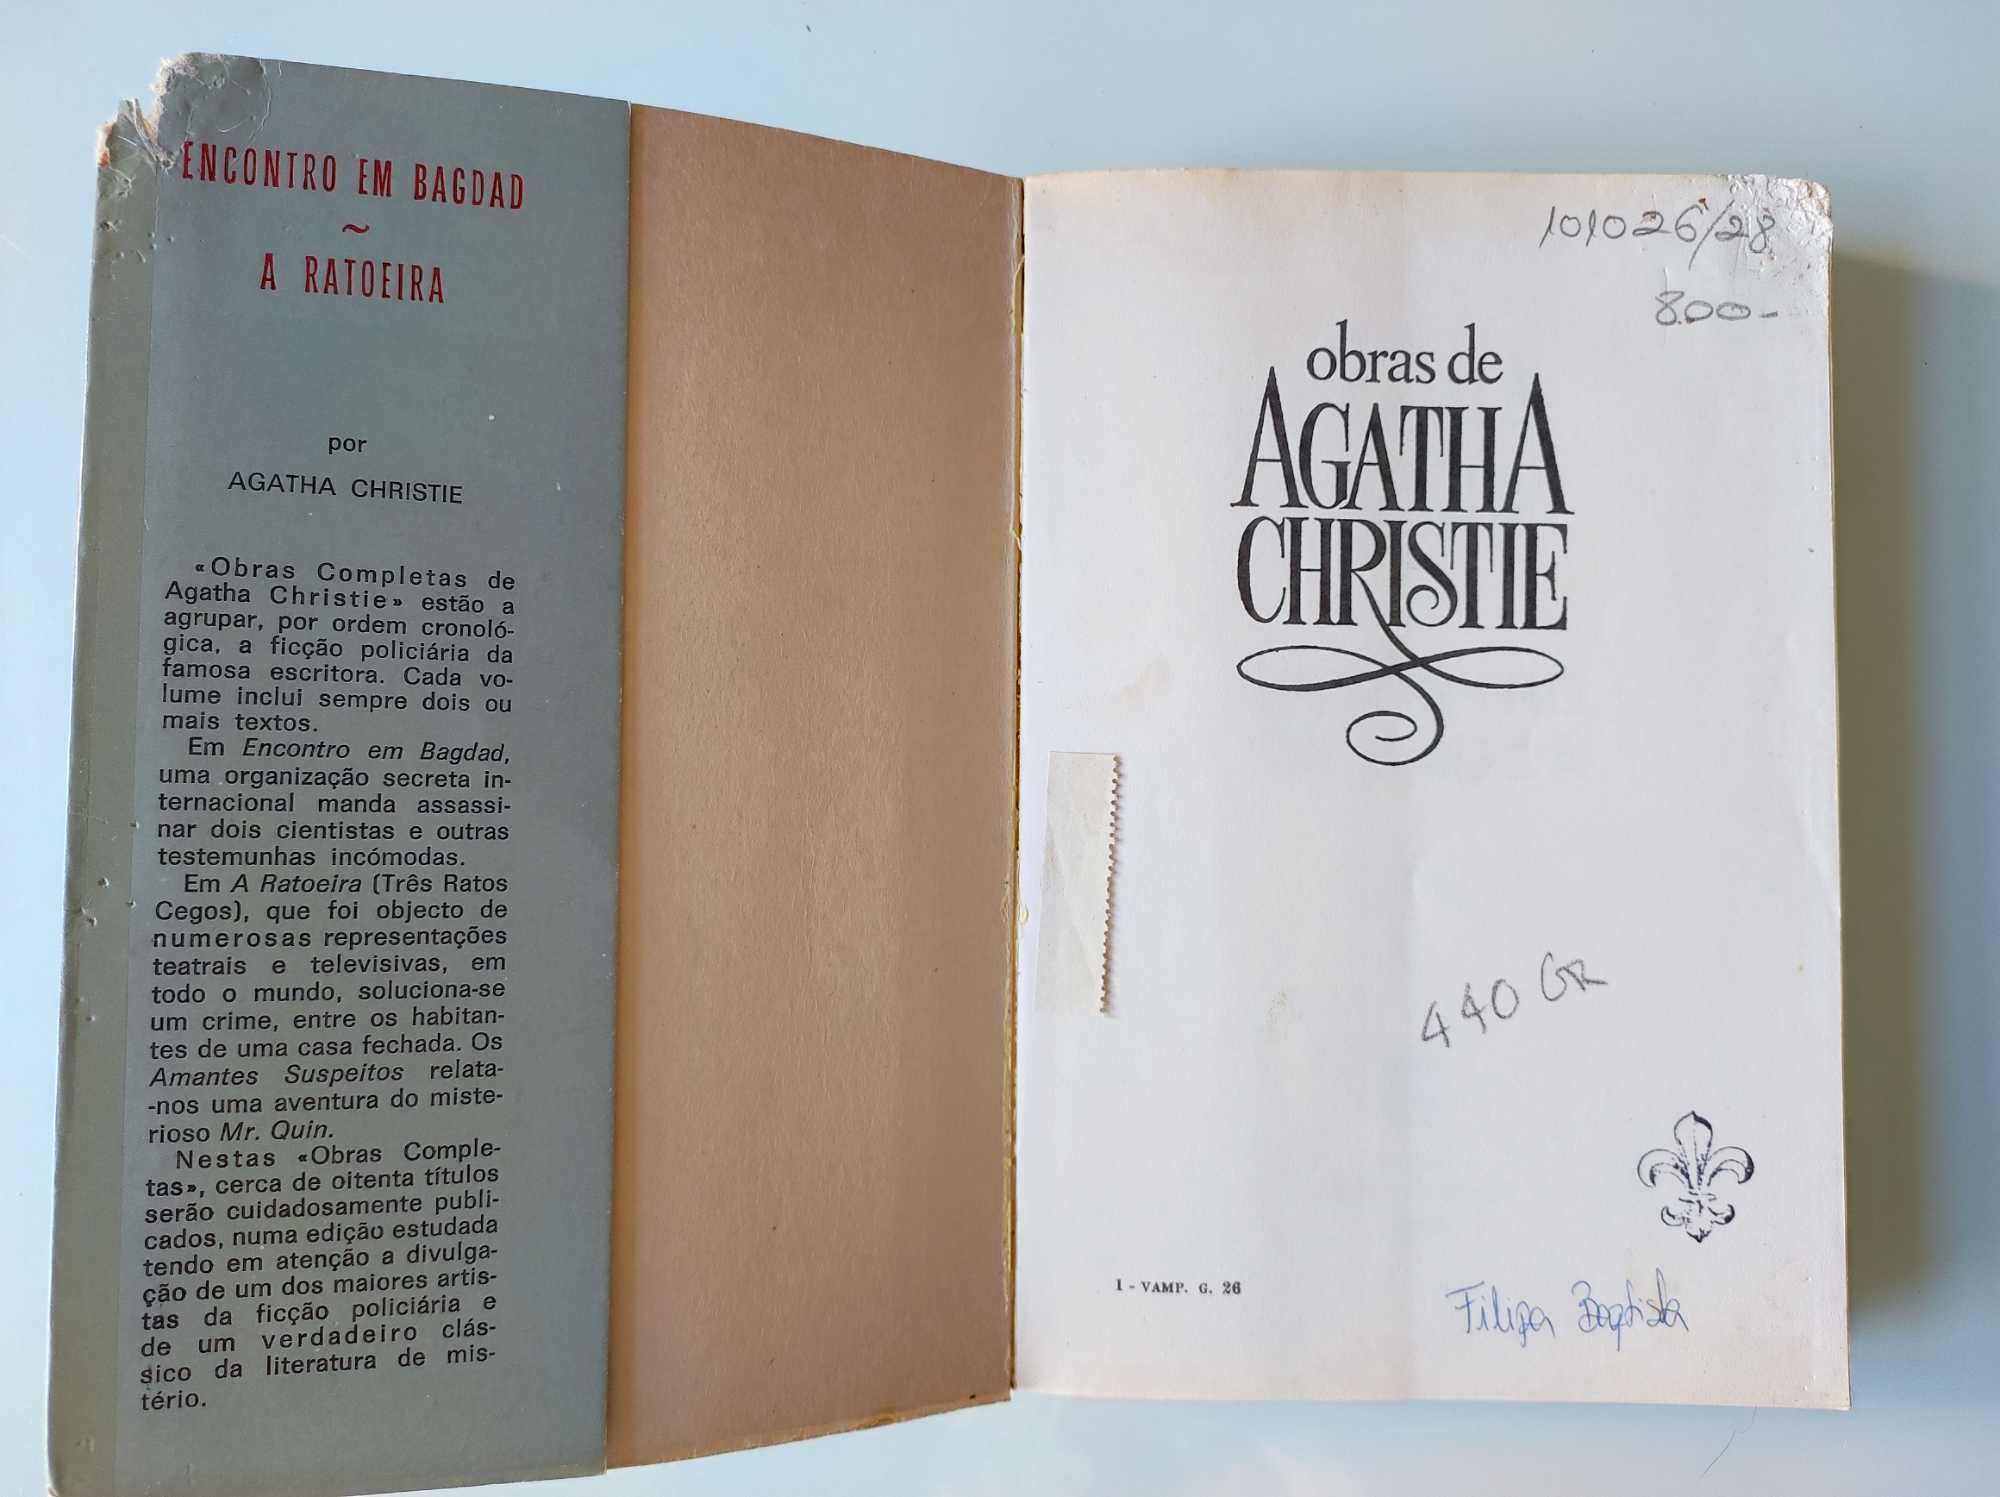 Agatha Christie entre 3€ e 5€ cada, da Vampiro Gigante